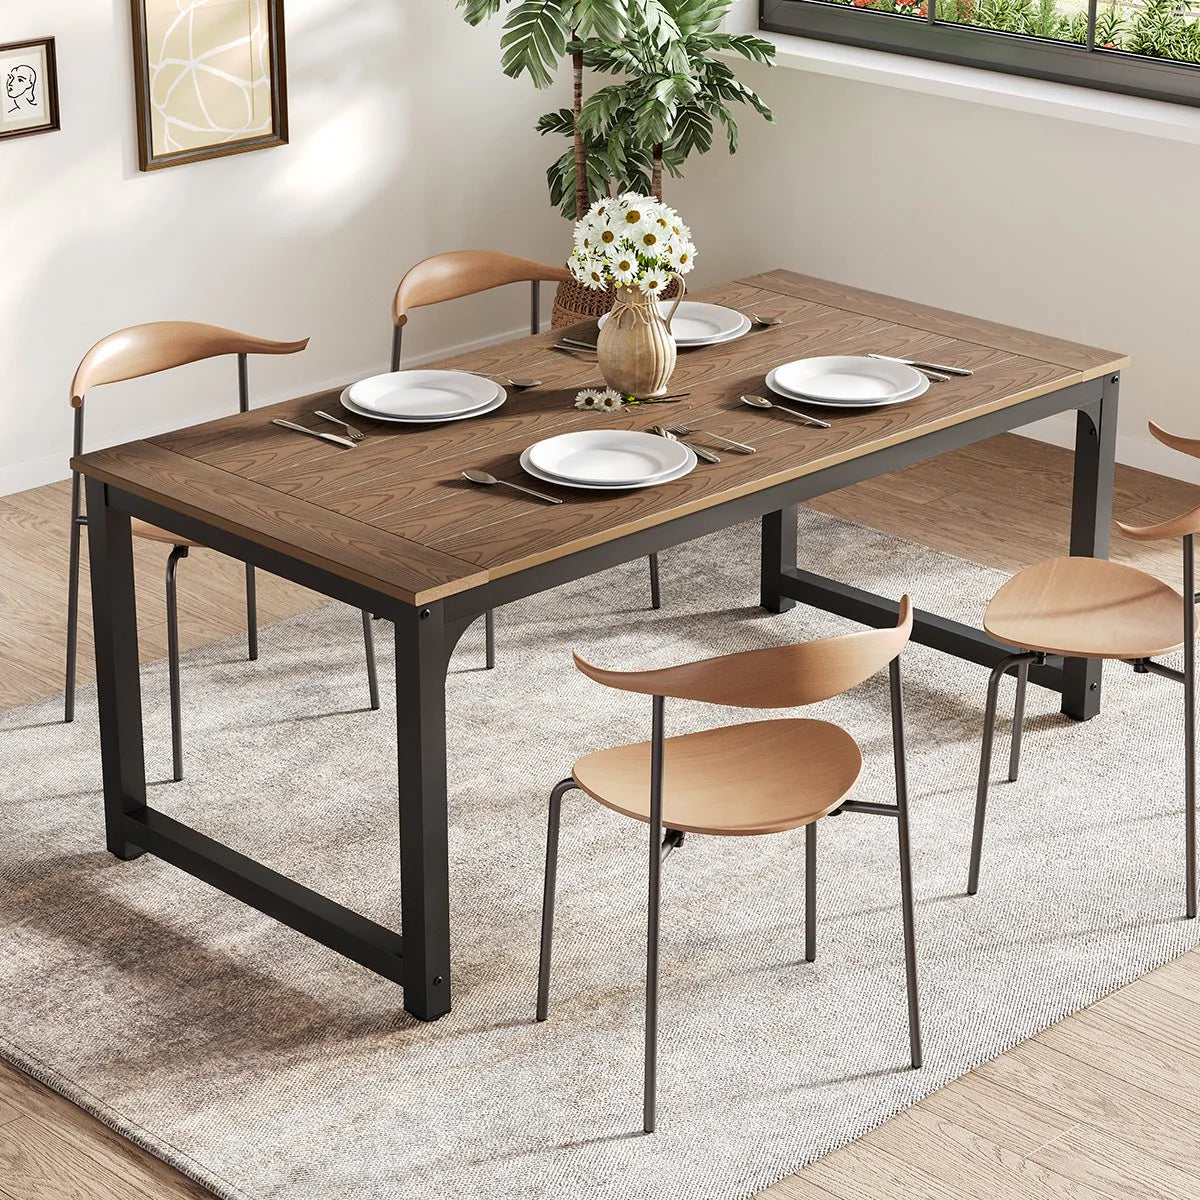 Marta Outdoor Indoor Dining Table | Wooden Rectangular Patio Kitchen Table